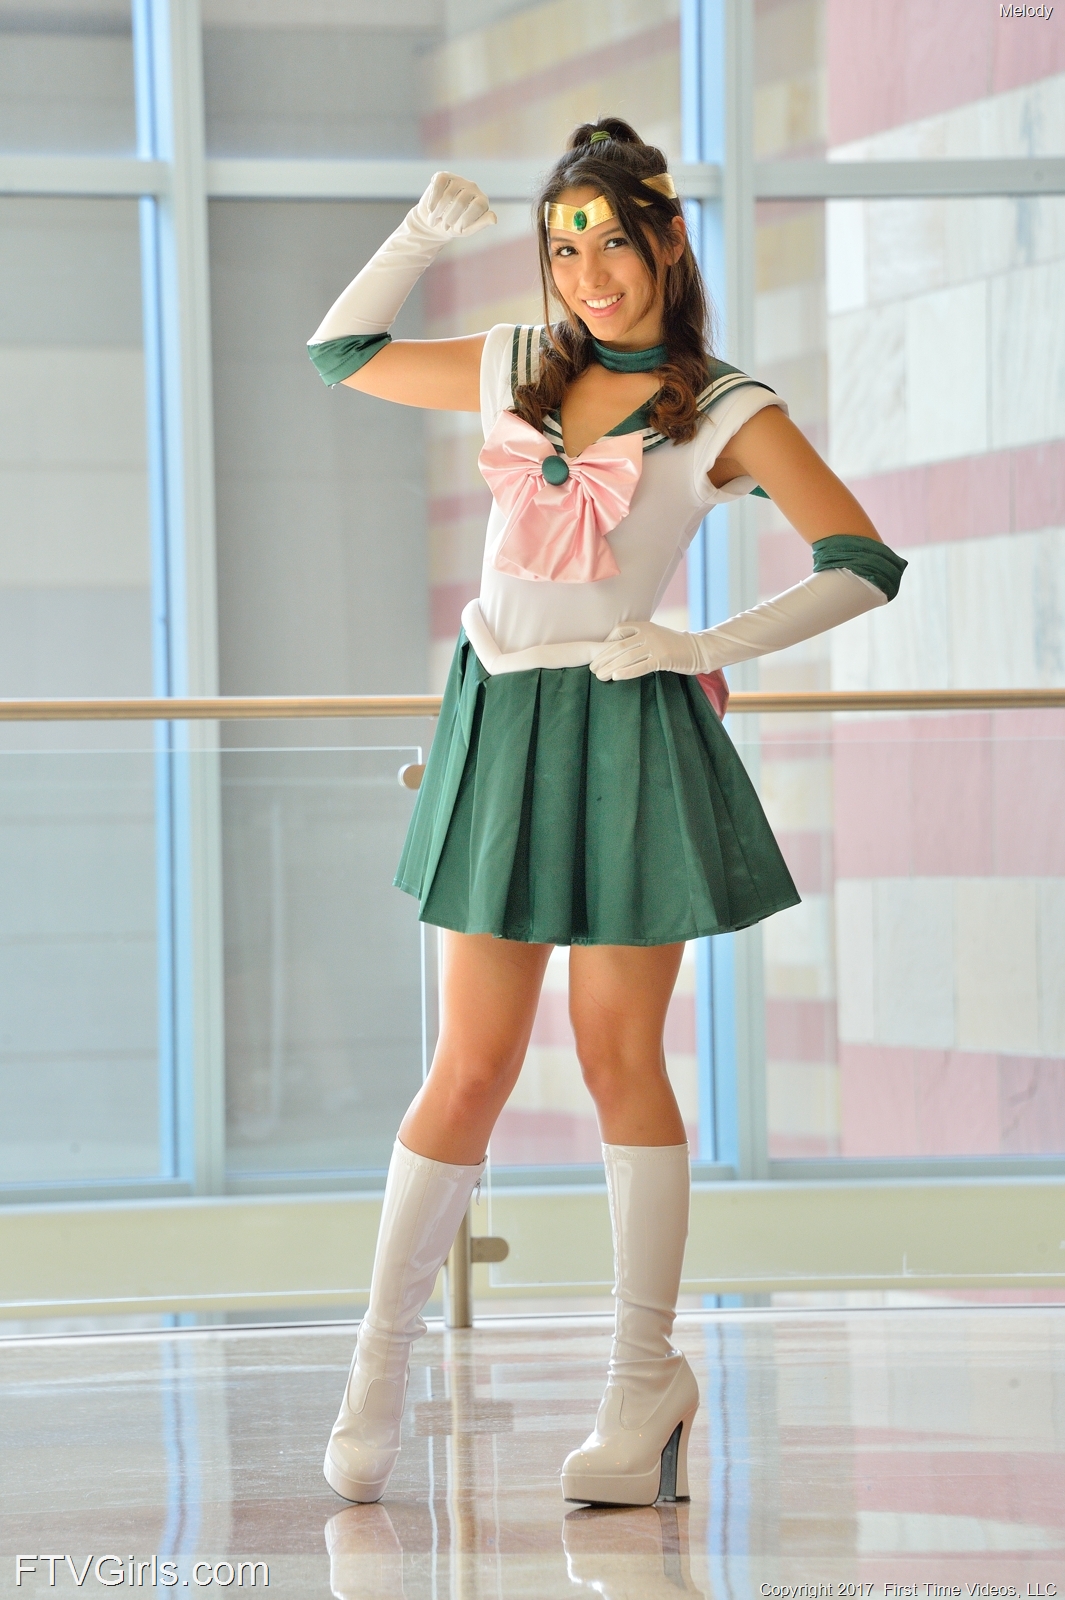 Cosplay Women Brunette Asian Sailor Jupiter Sailor Outfit Portrait Display High Heeled Boots Smiling 1065x1600